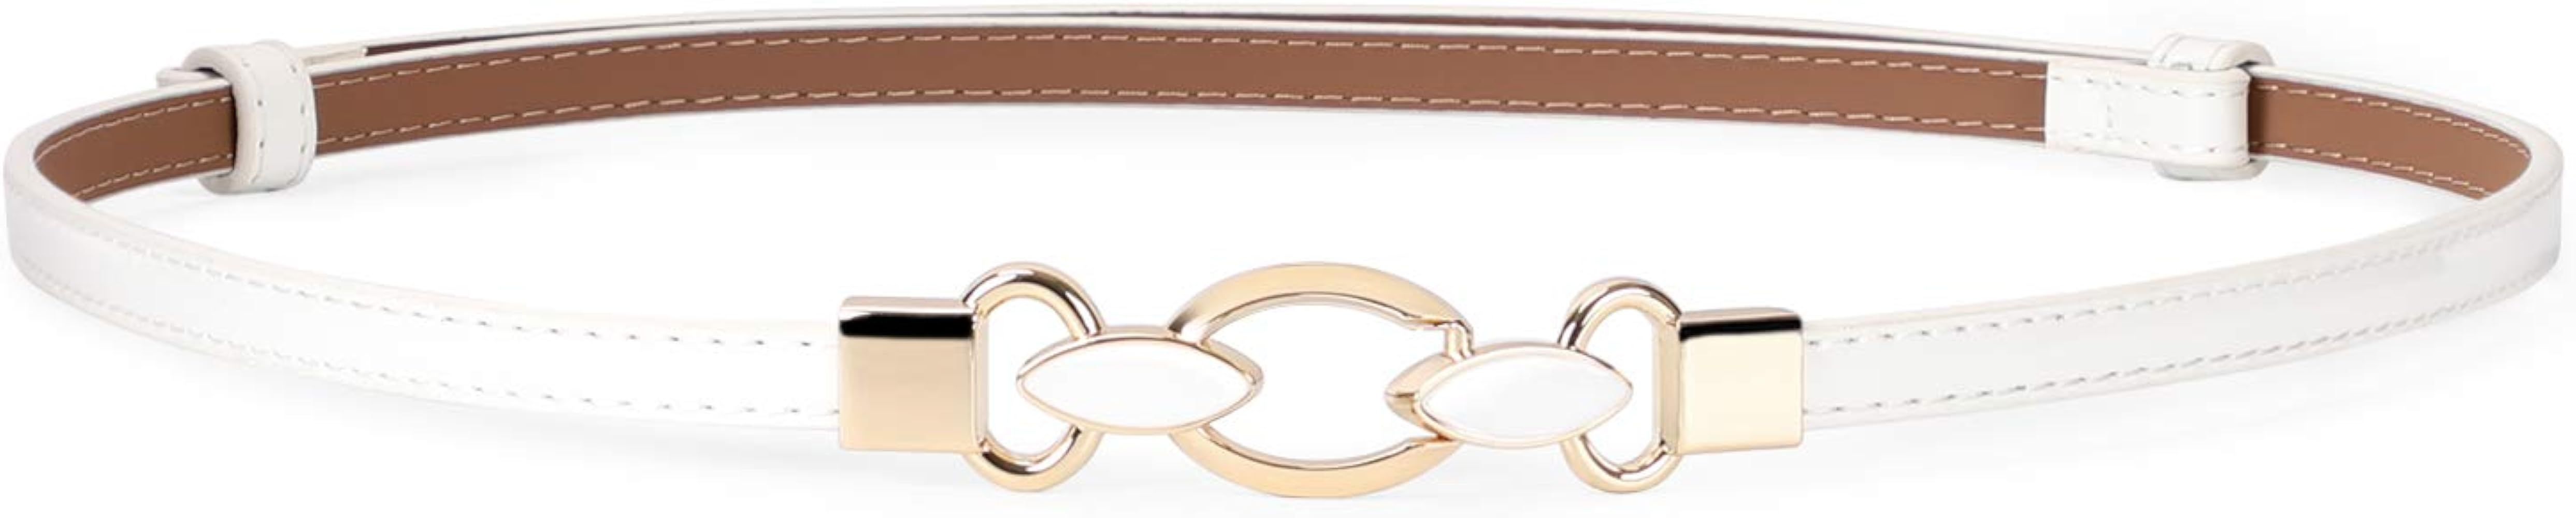 XZQTIVE Skinny Belts For Women Thin Leather Waist Belt Fashion Ladies Belt For Dress Pant | Amazon (US)